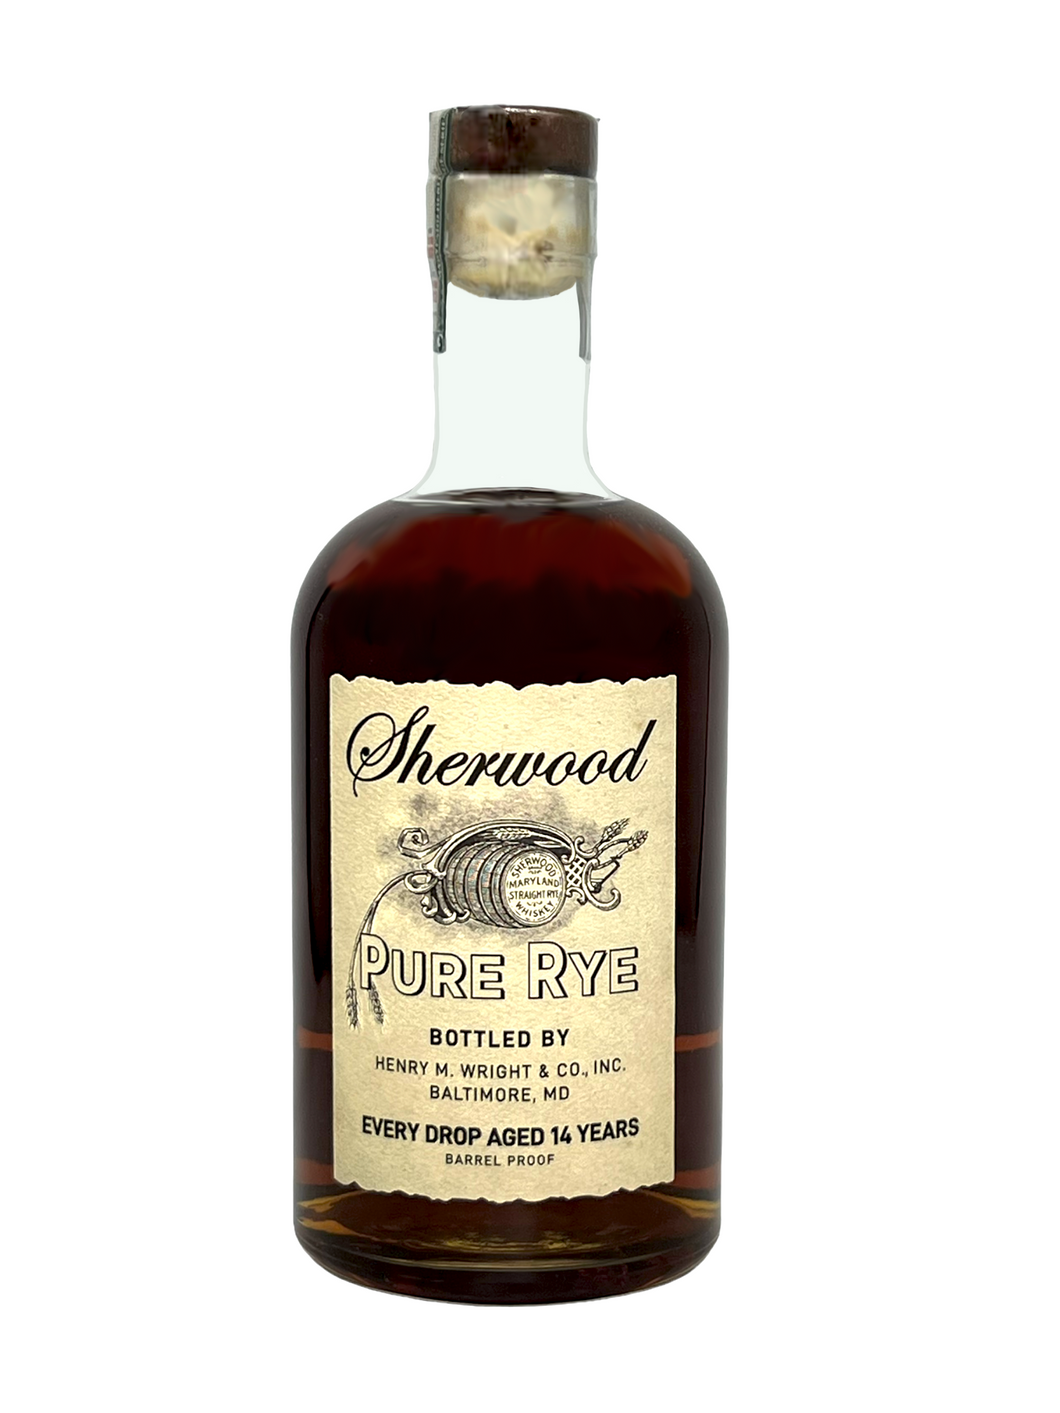 Sherwood Distillery Company – Bygone Maryland